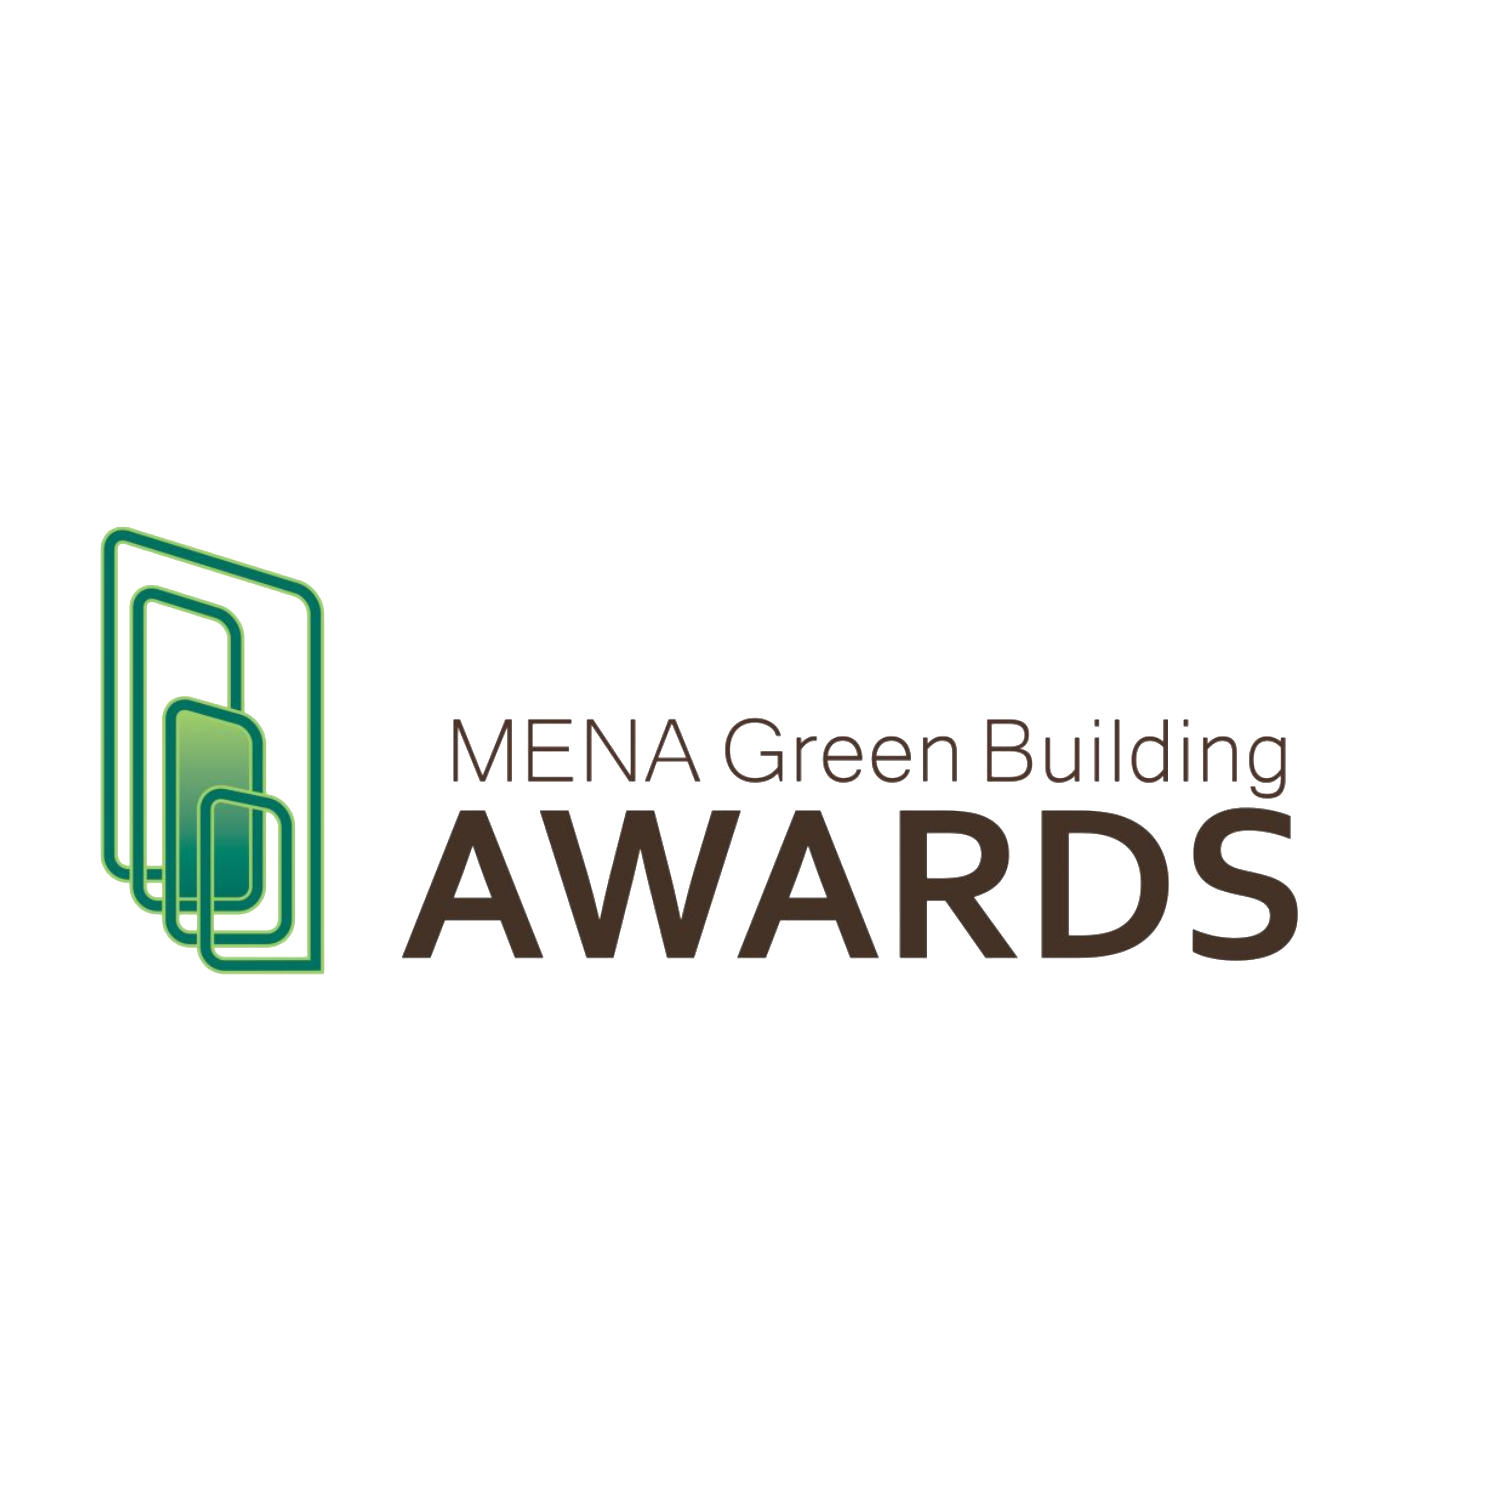 Mena Green Building Awards logo